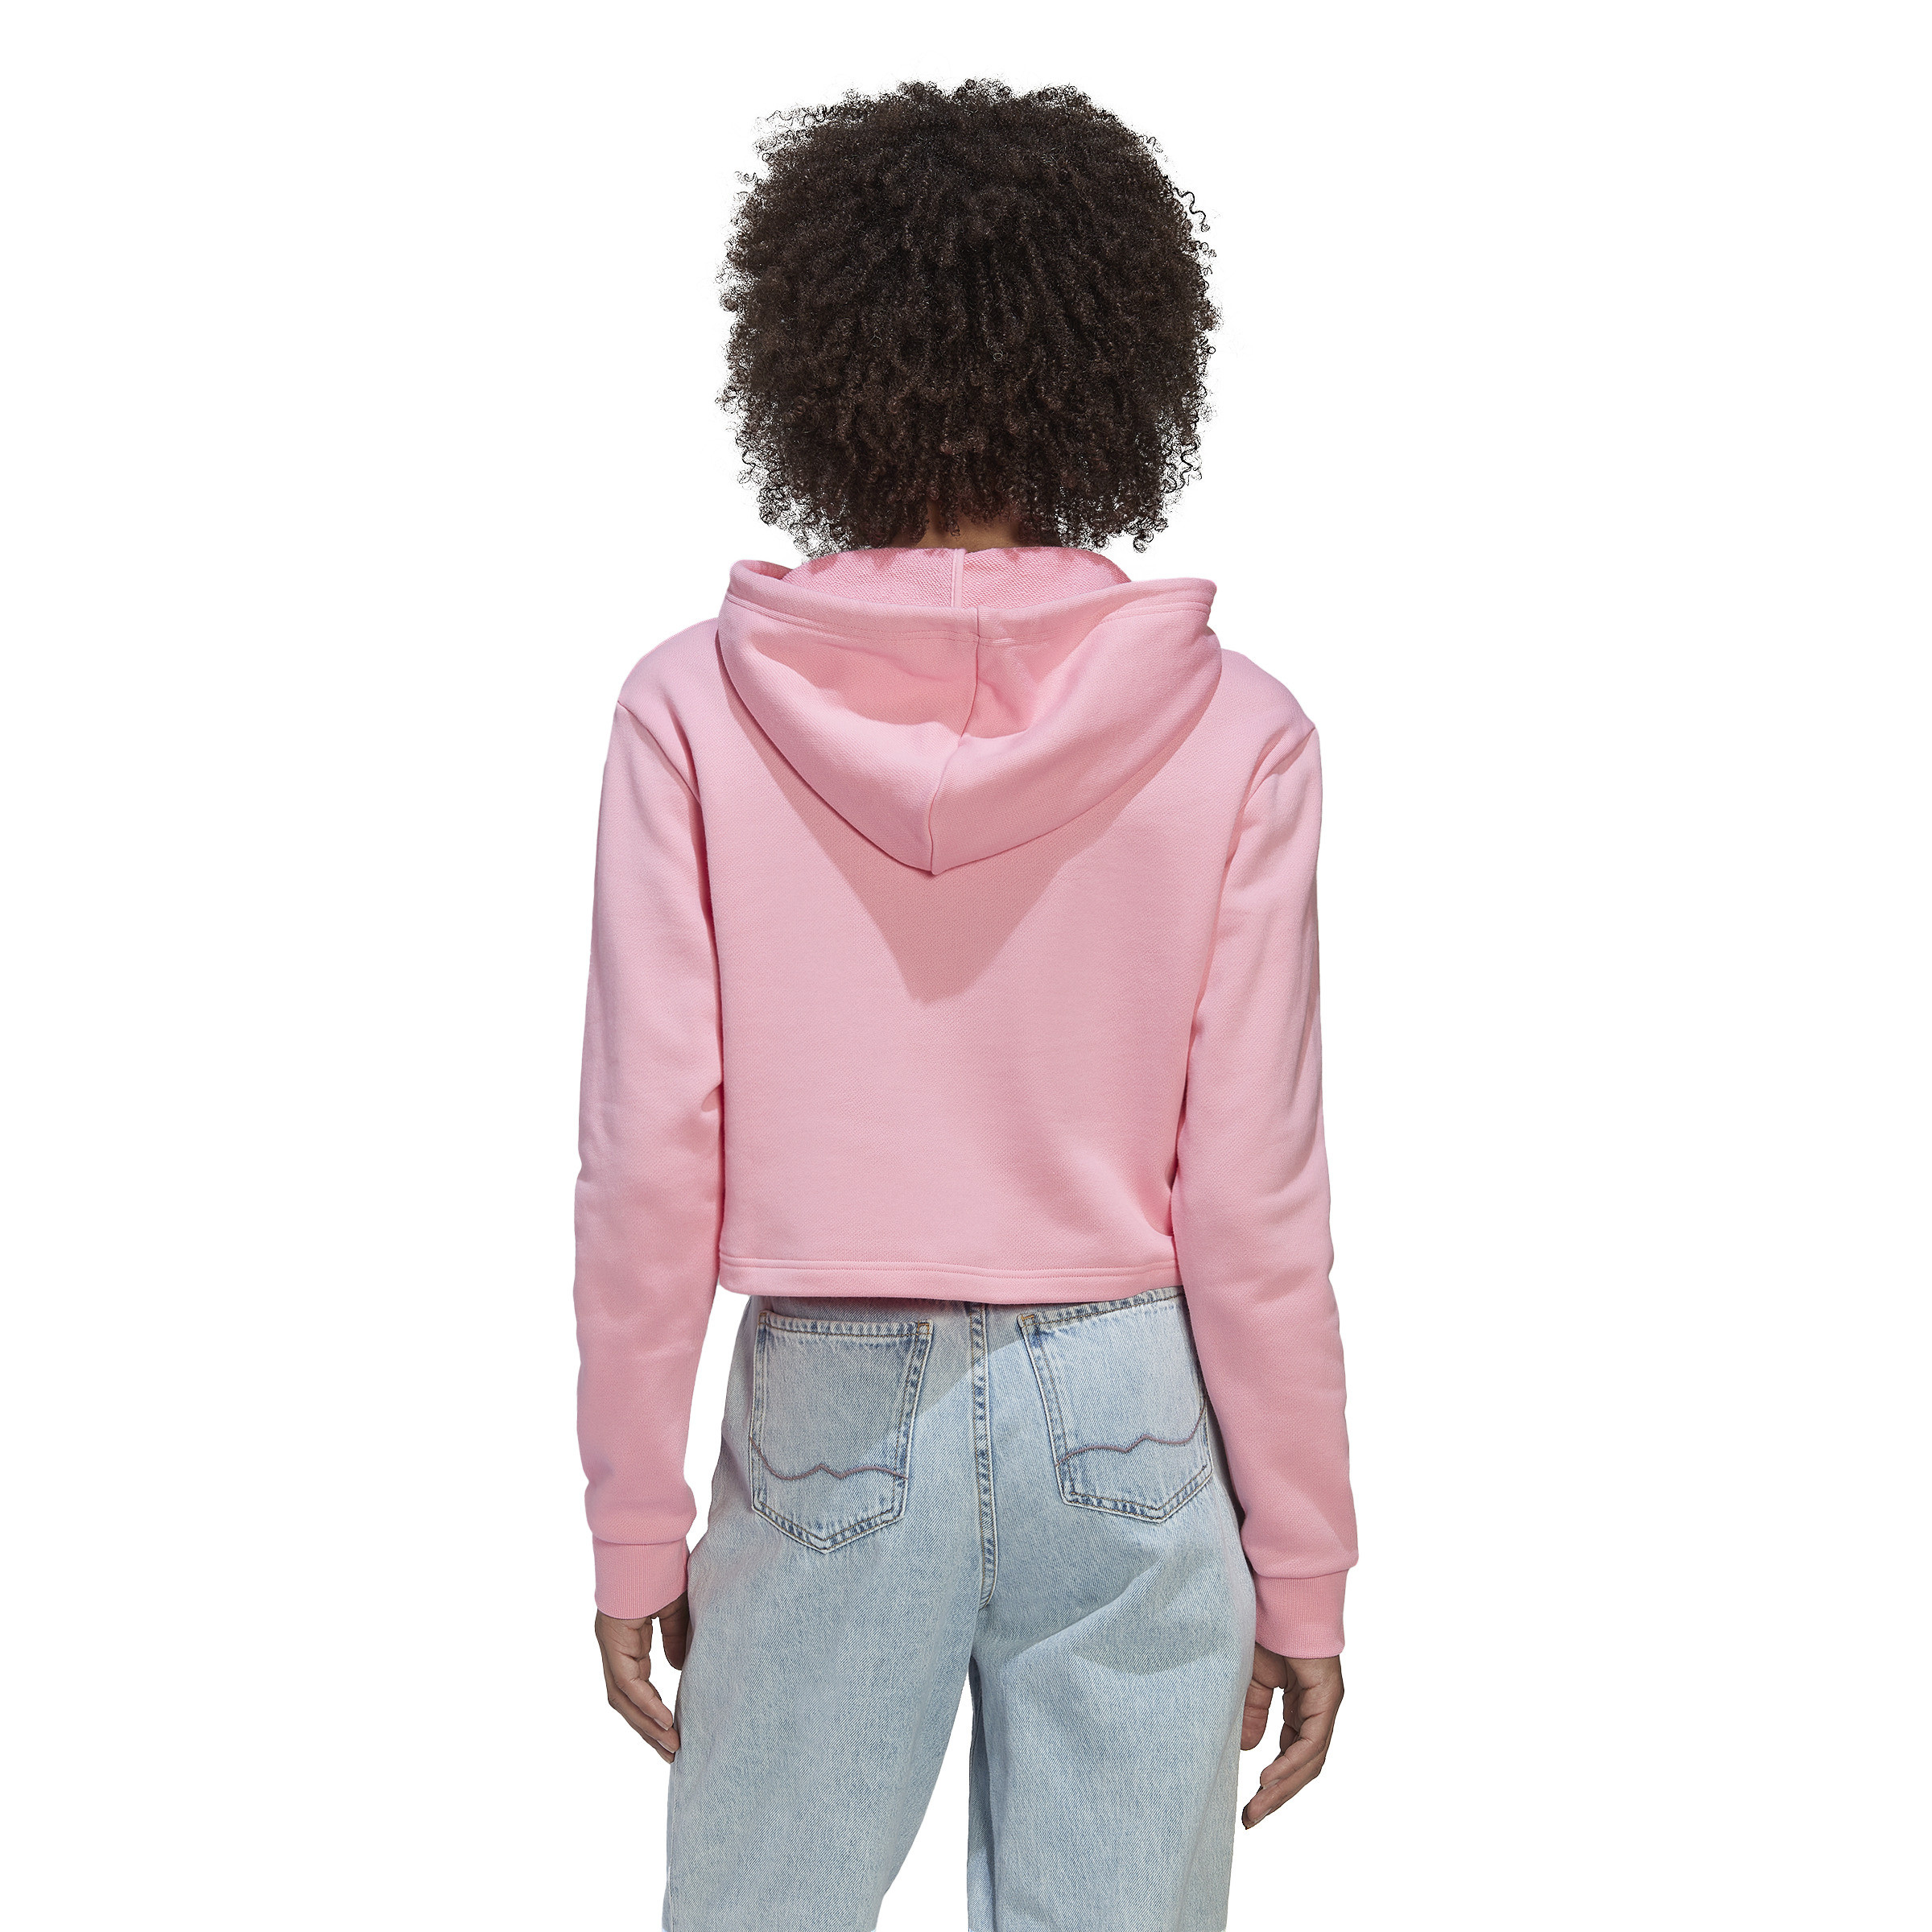 Adidas - Adicolor crop sweatshirt, Pink, large image number 5